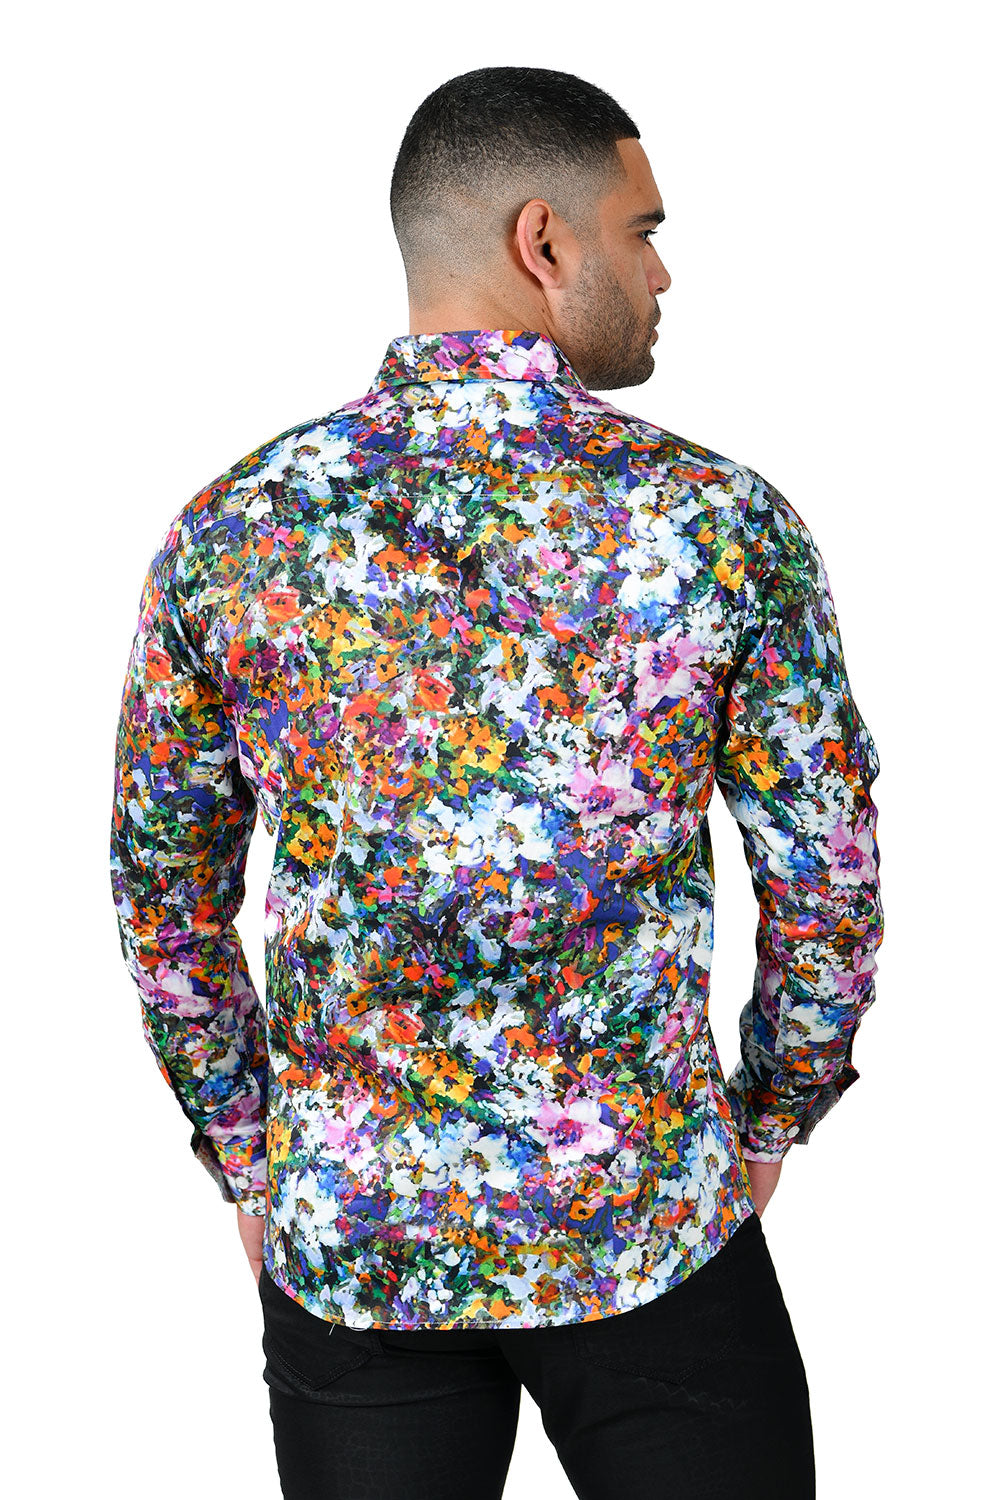 BARABAS men's abstract paint printed long sleeve shirts SP223